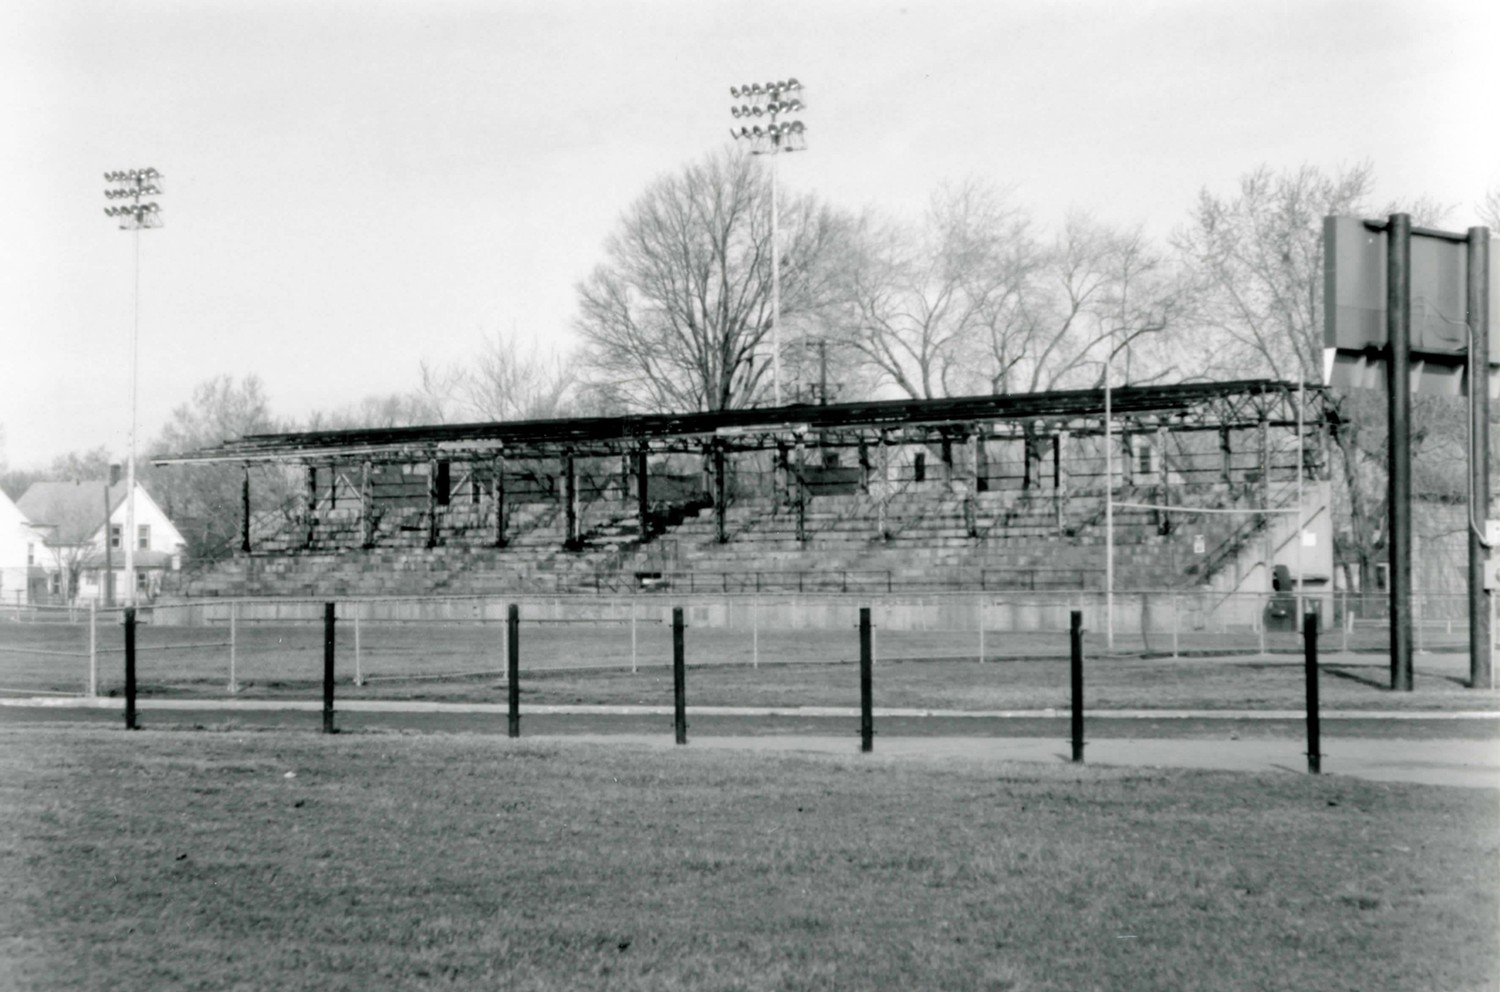 West Technical High School, Cleveland Ohio Grandstands looking northwest (2000)